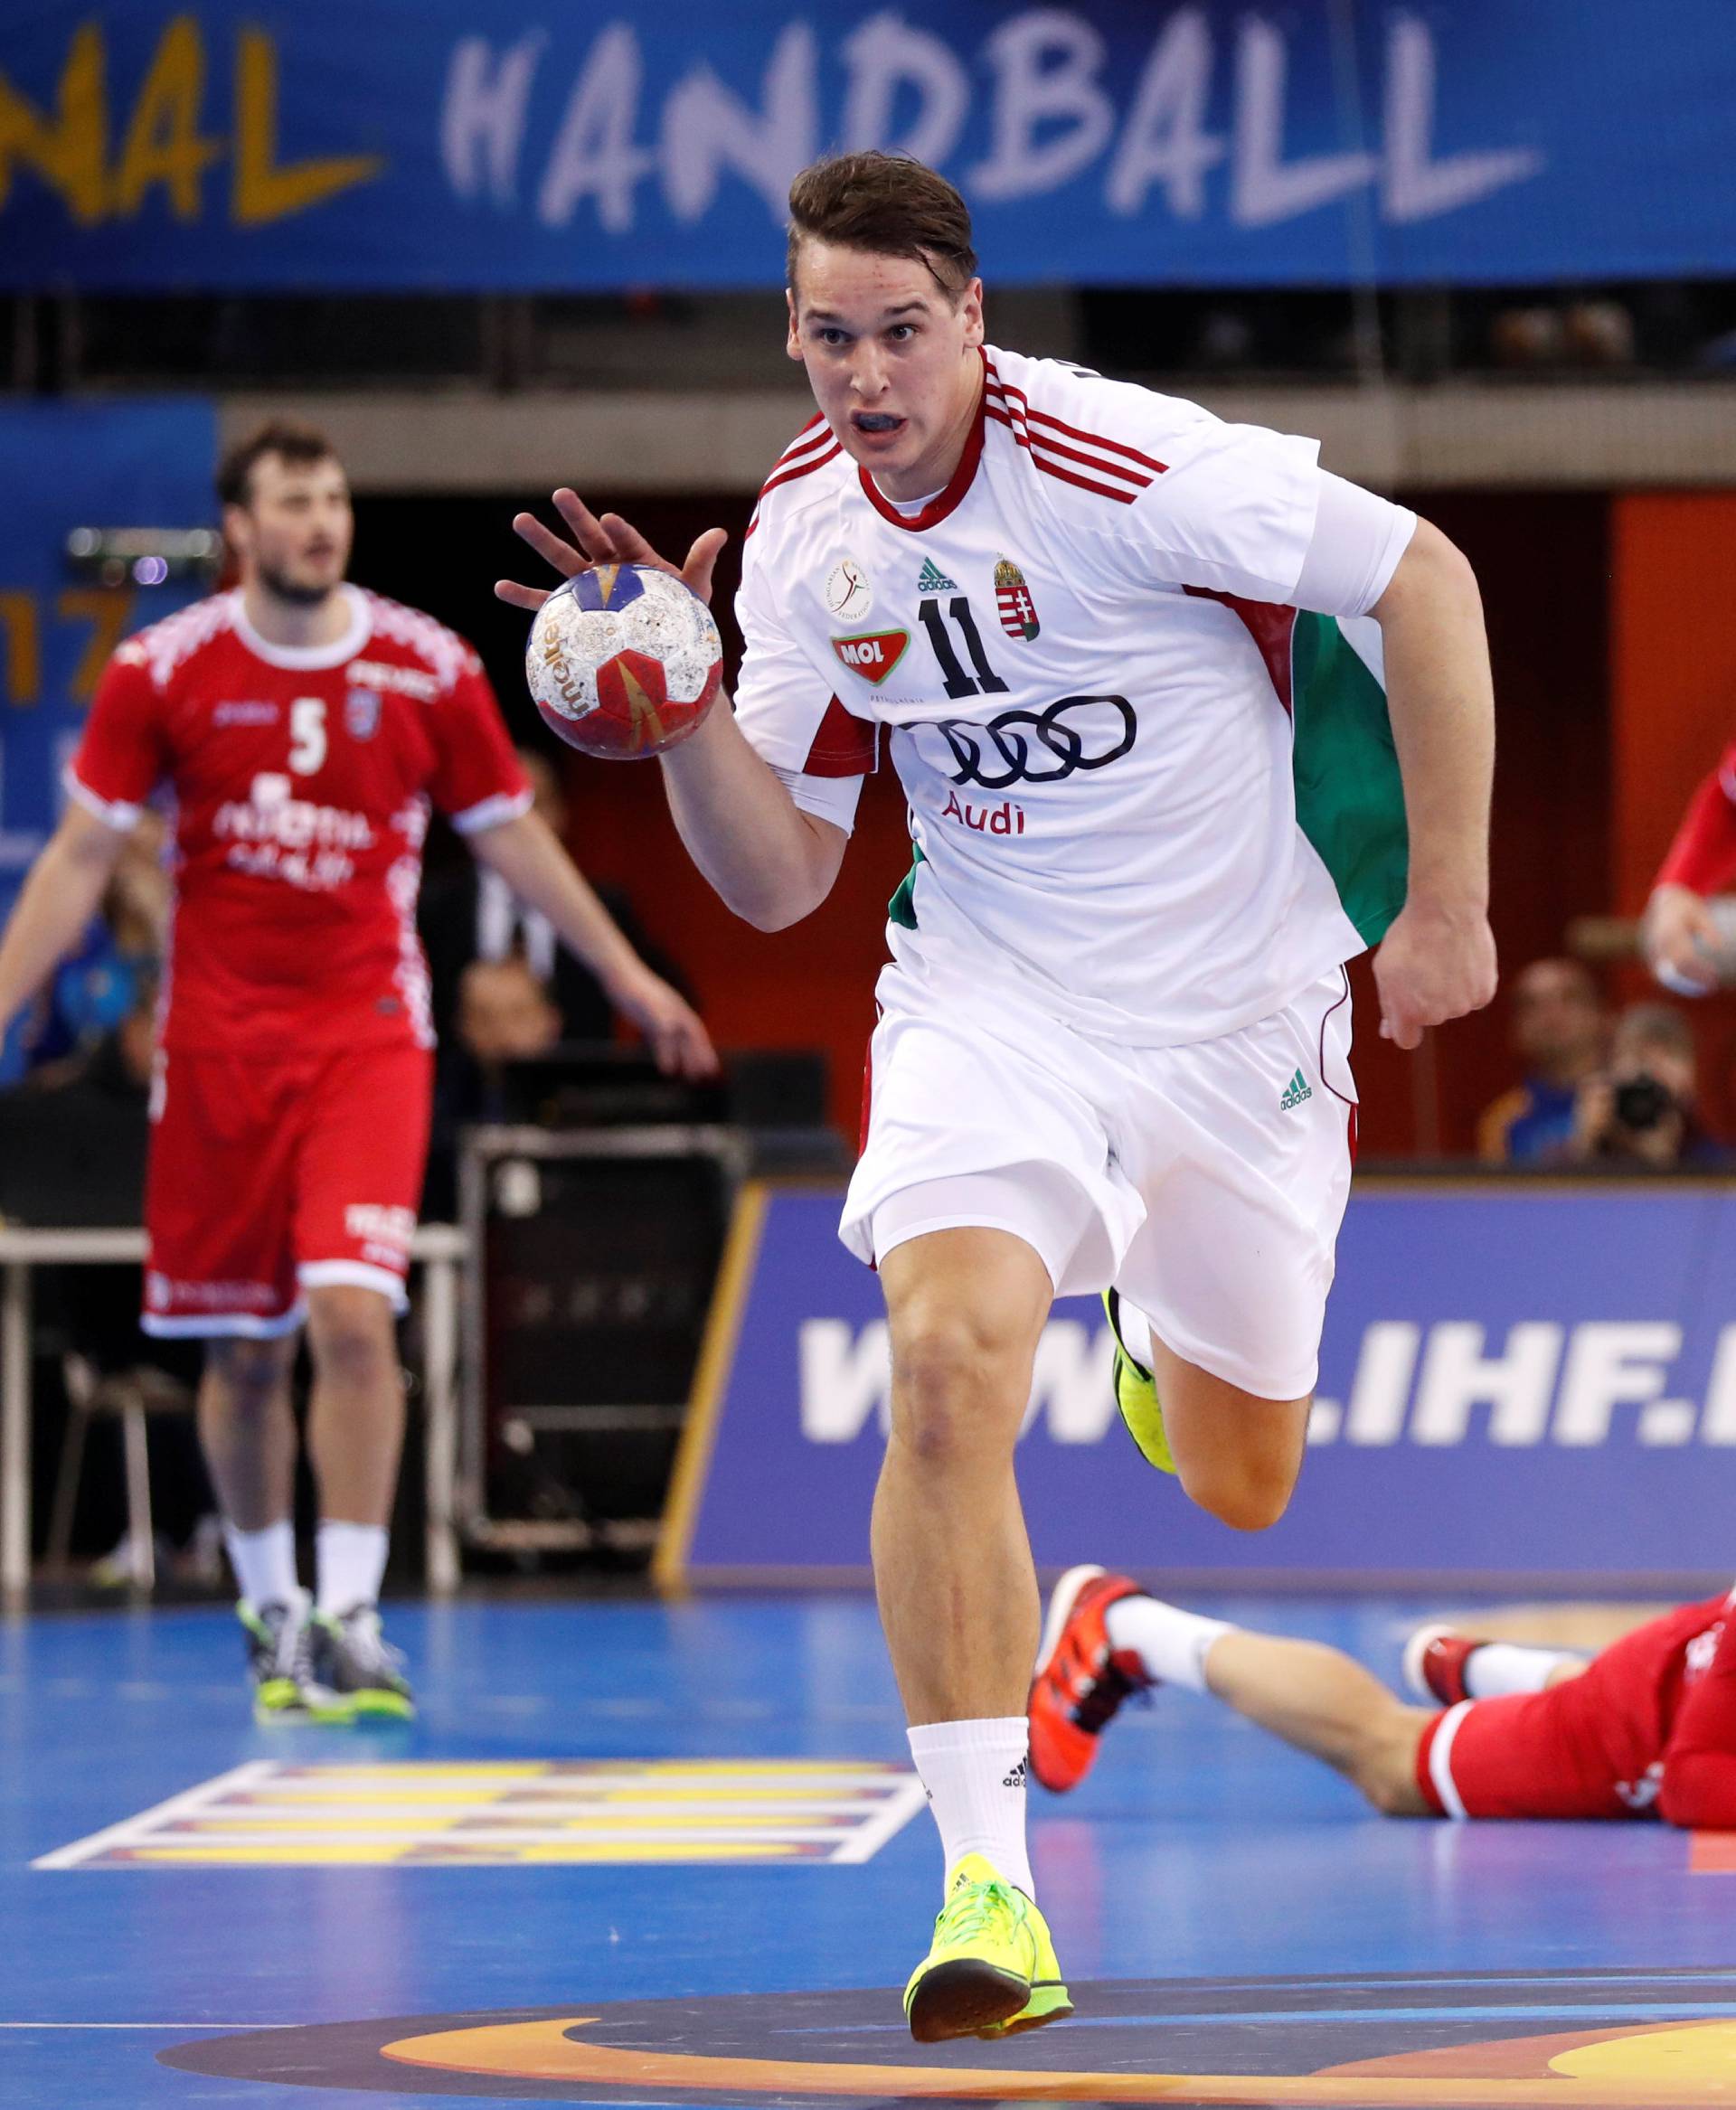 Men's Handball - Hungary v Croatia - 2017 Men's World Championship Main Round - Group C